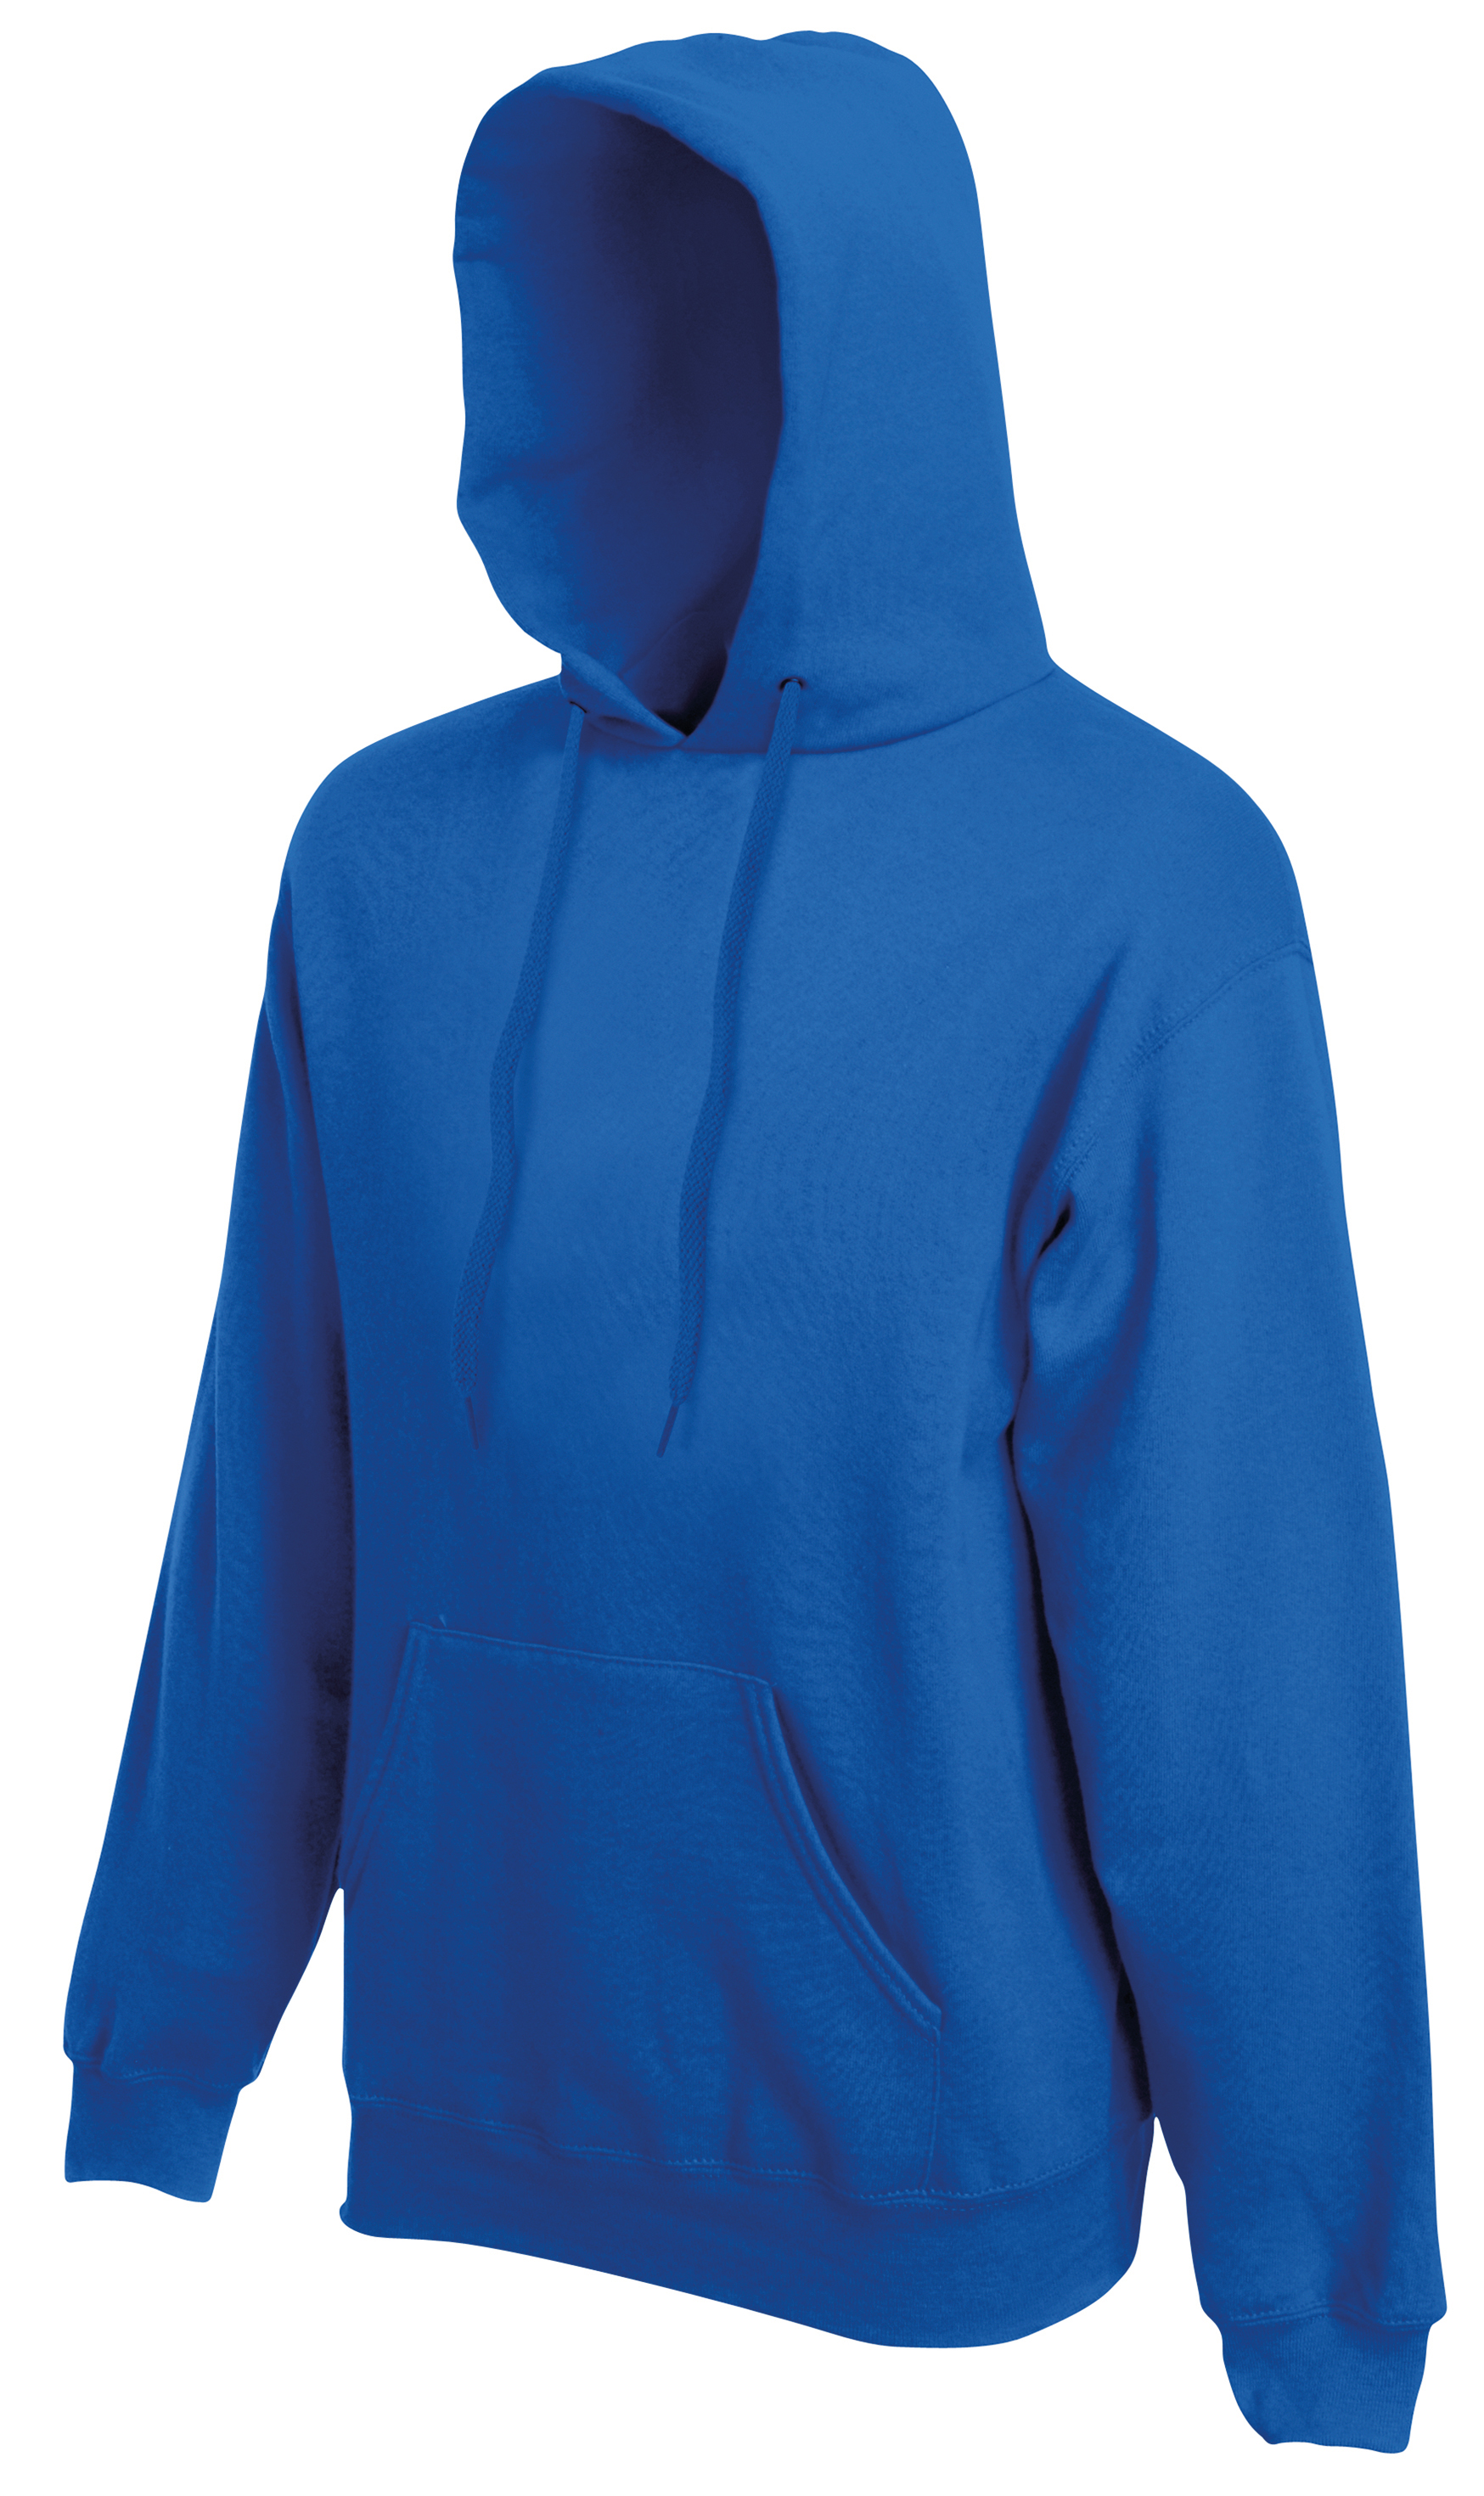 ax-httpswebsystems.s3.amazonaws.comtmp_for_downloadfruit-of-the-loom-premium-70-30-hooded-sweatshirt-royal-blue.jpeg